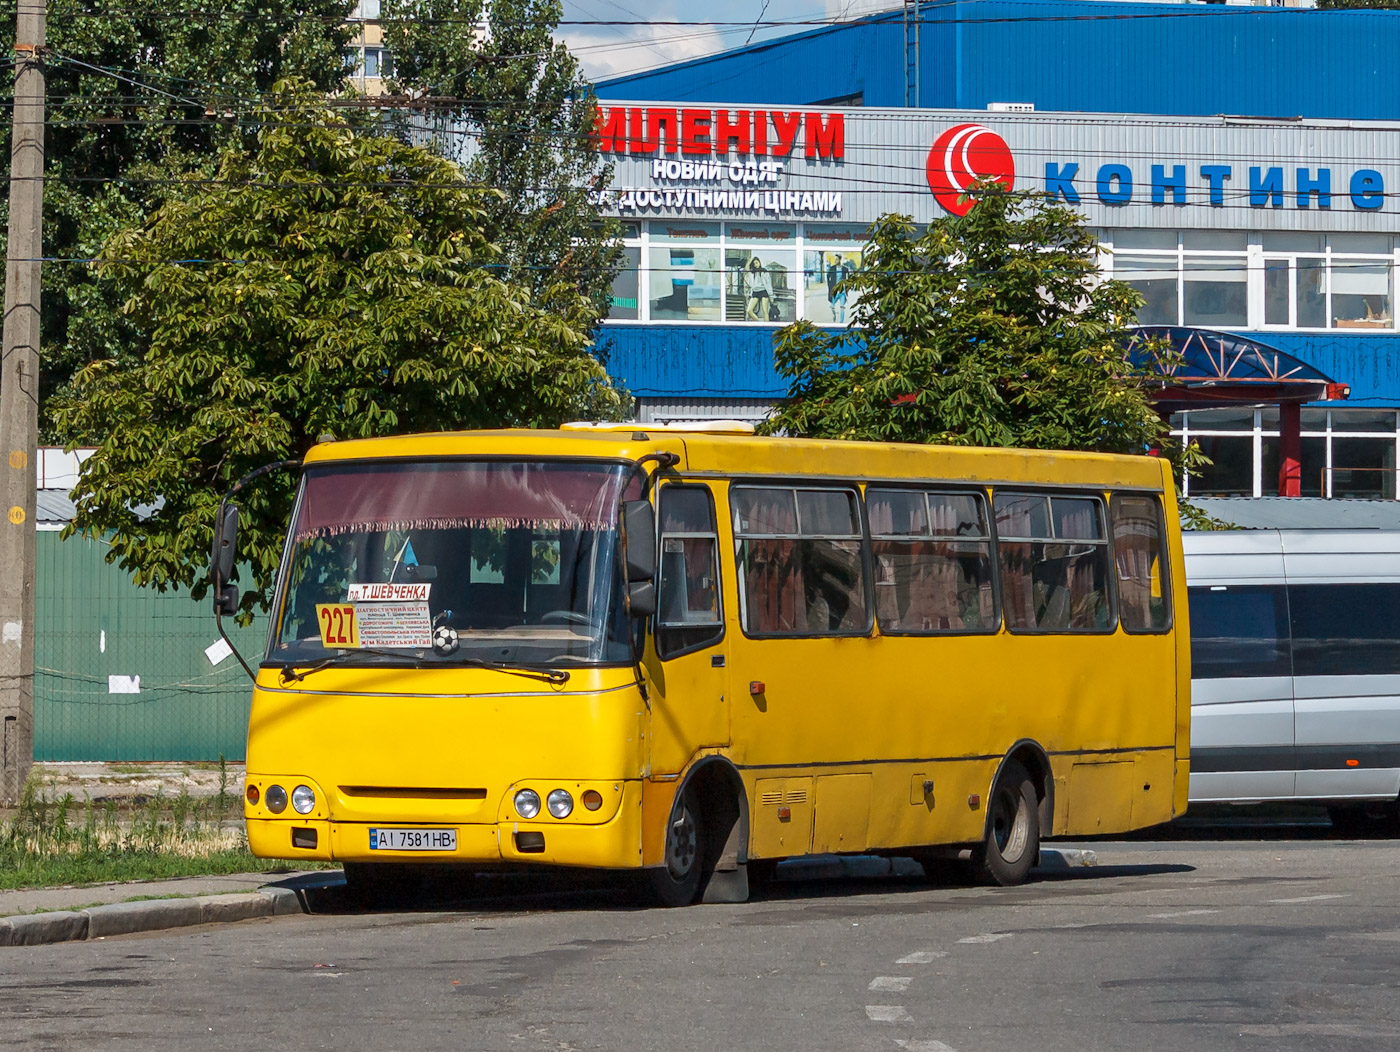 Kyiv, Bogdan А09201 № АІ 7581 НВ